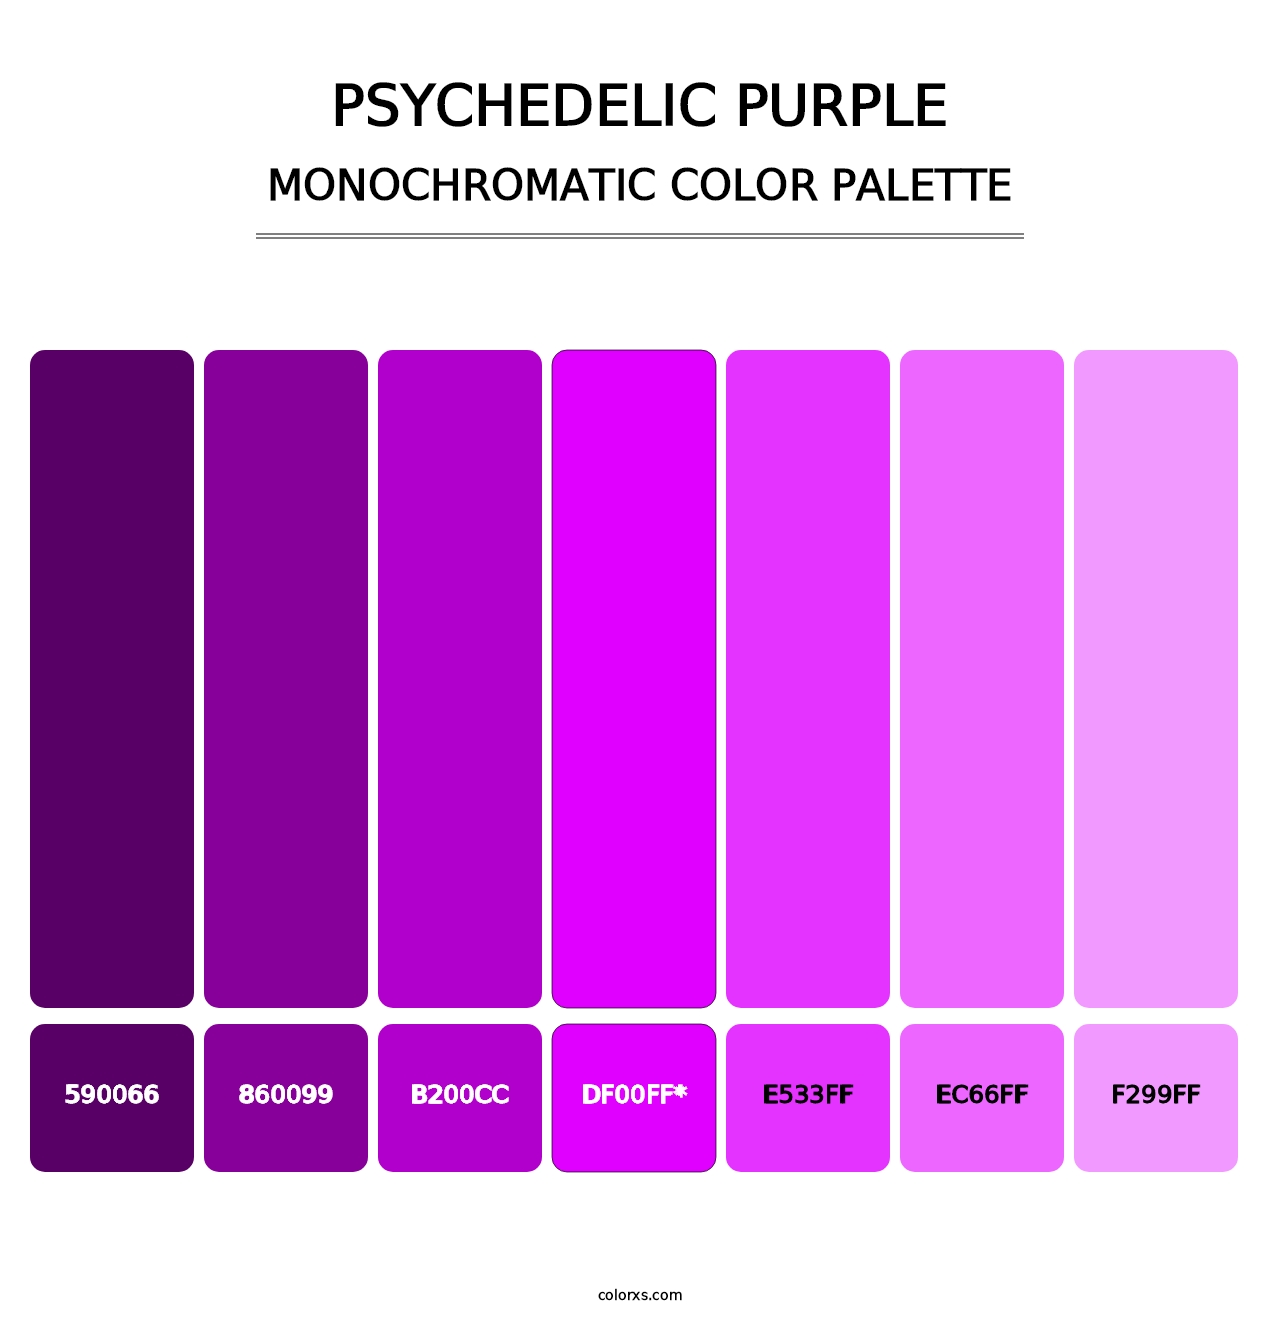 Psychedelic Purple - Monochromatic Color Palette